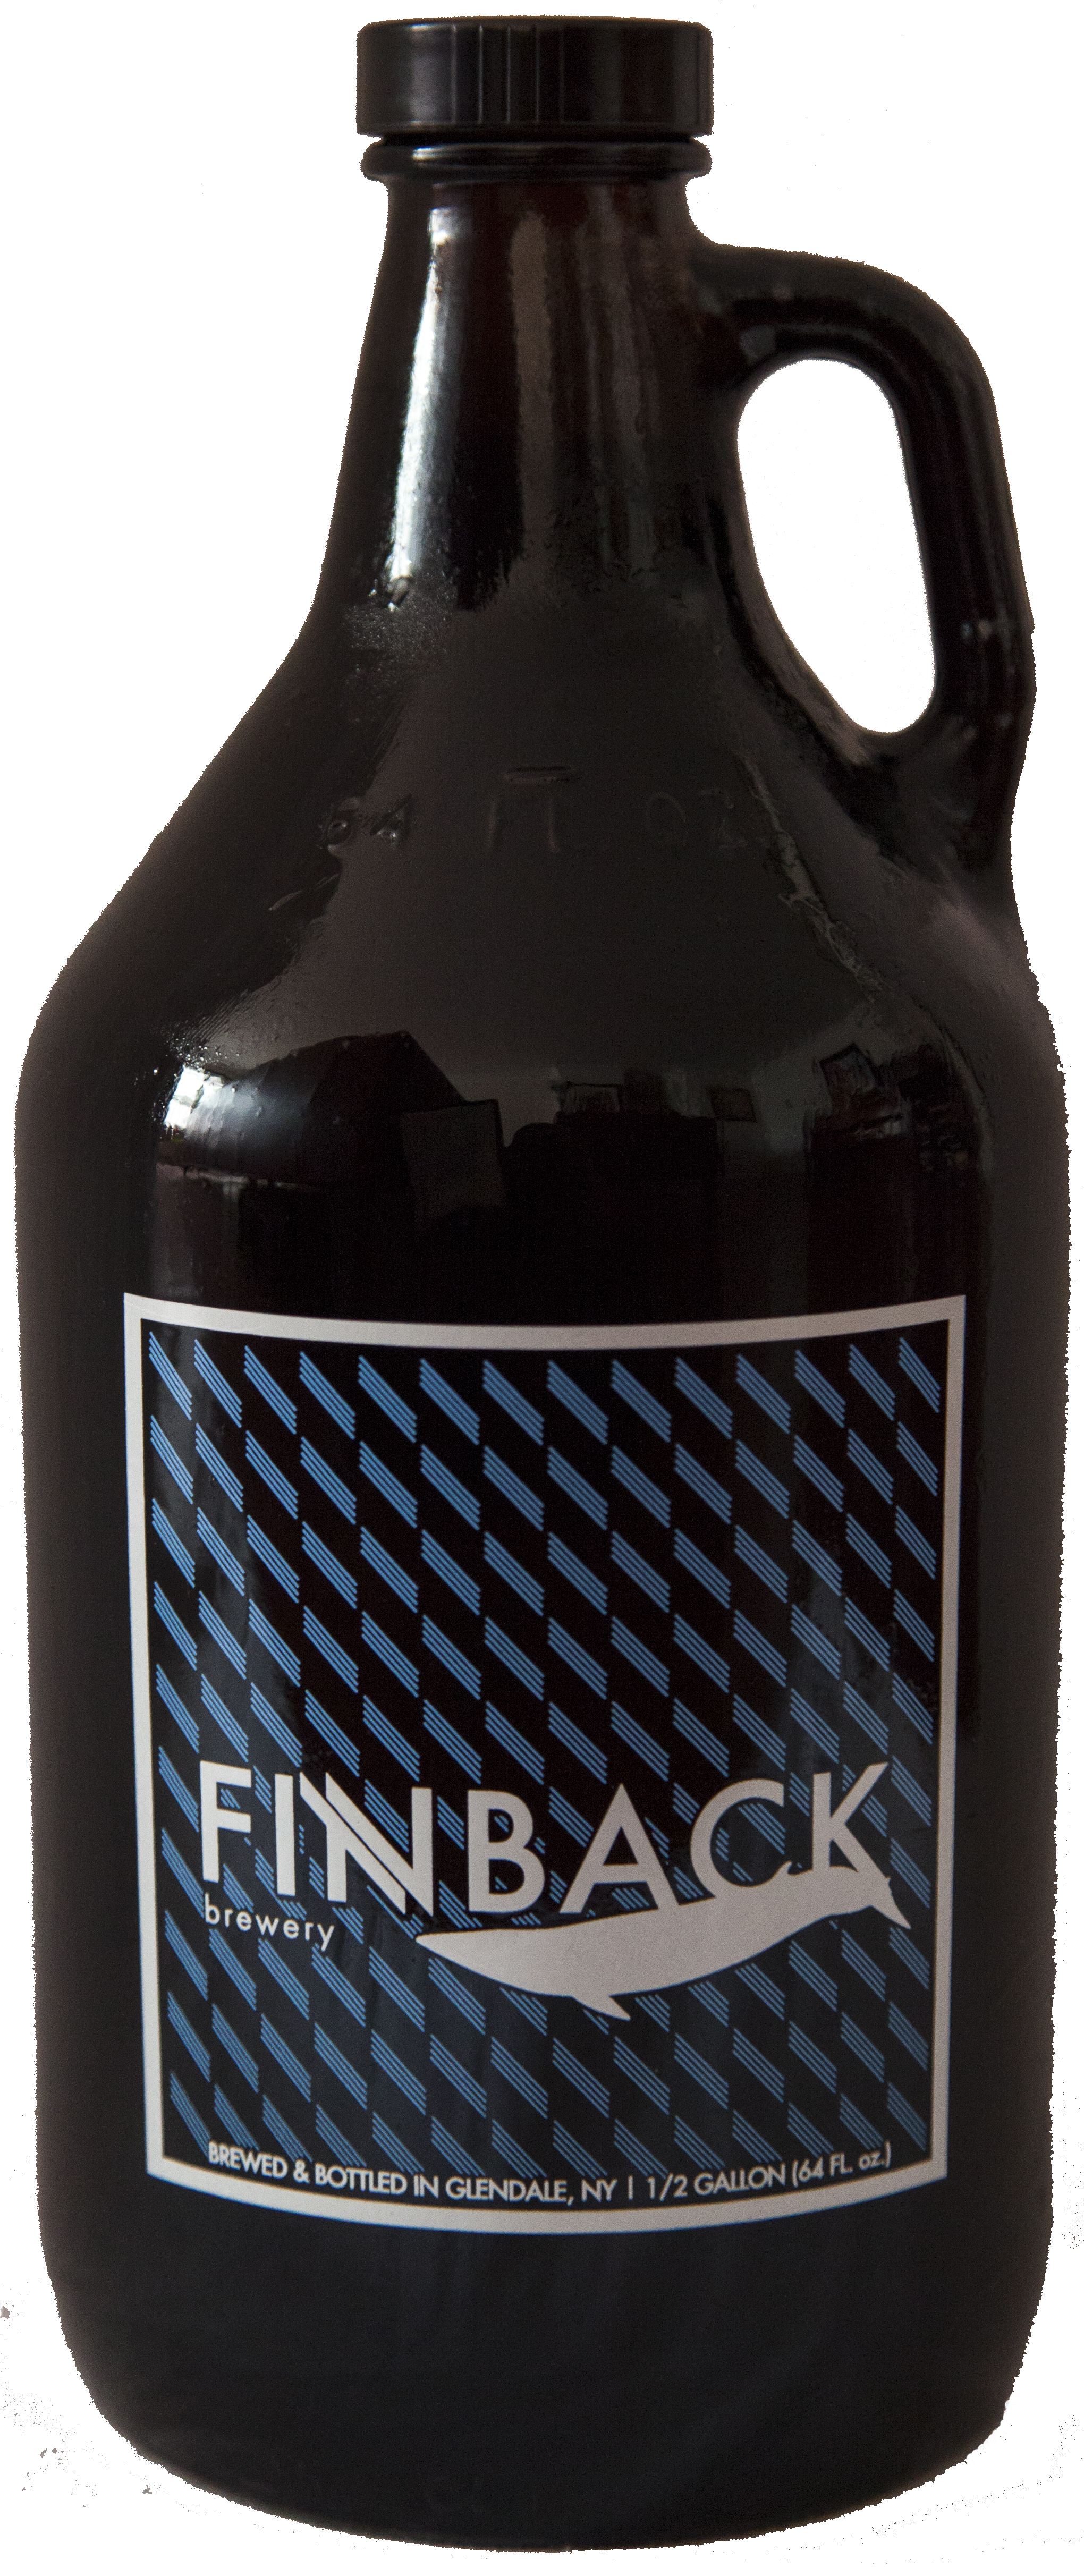 Finback Brewery Growler